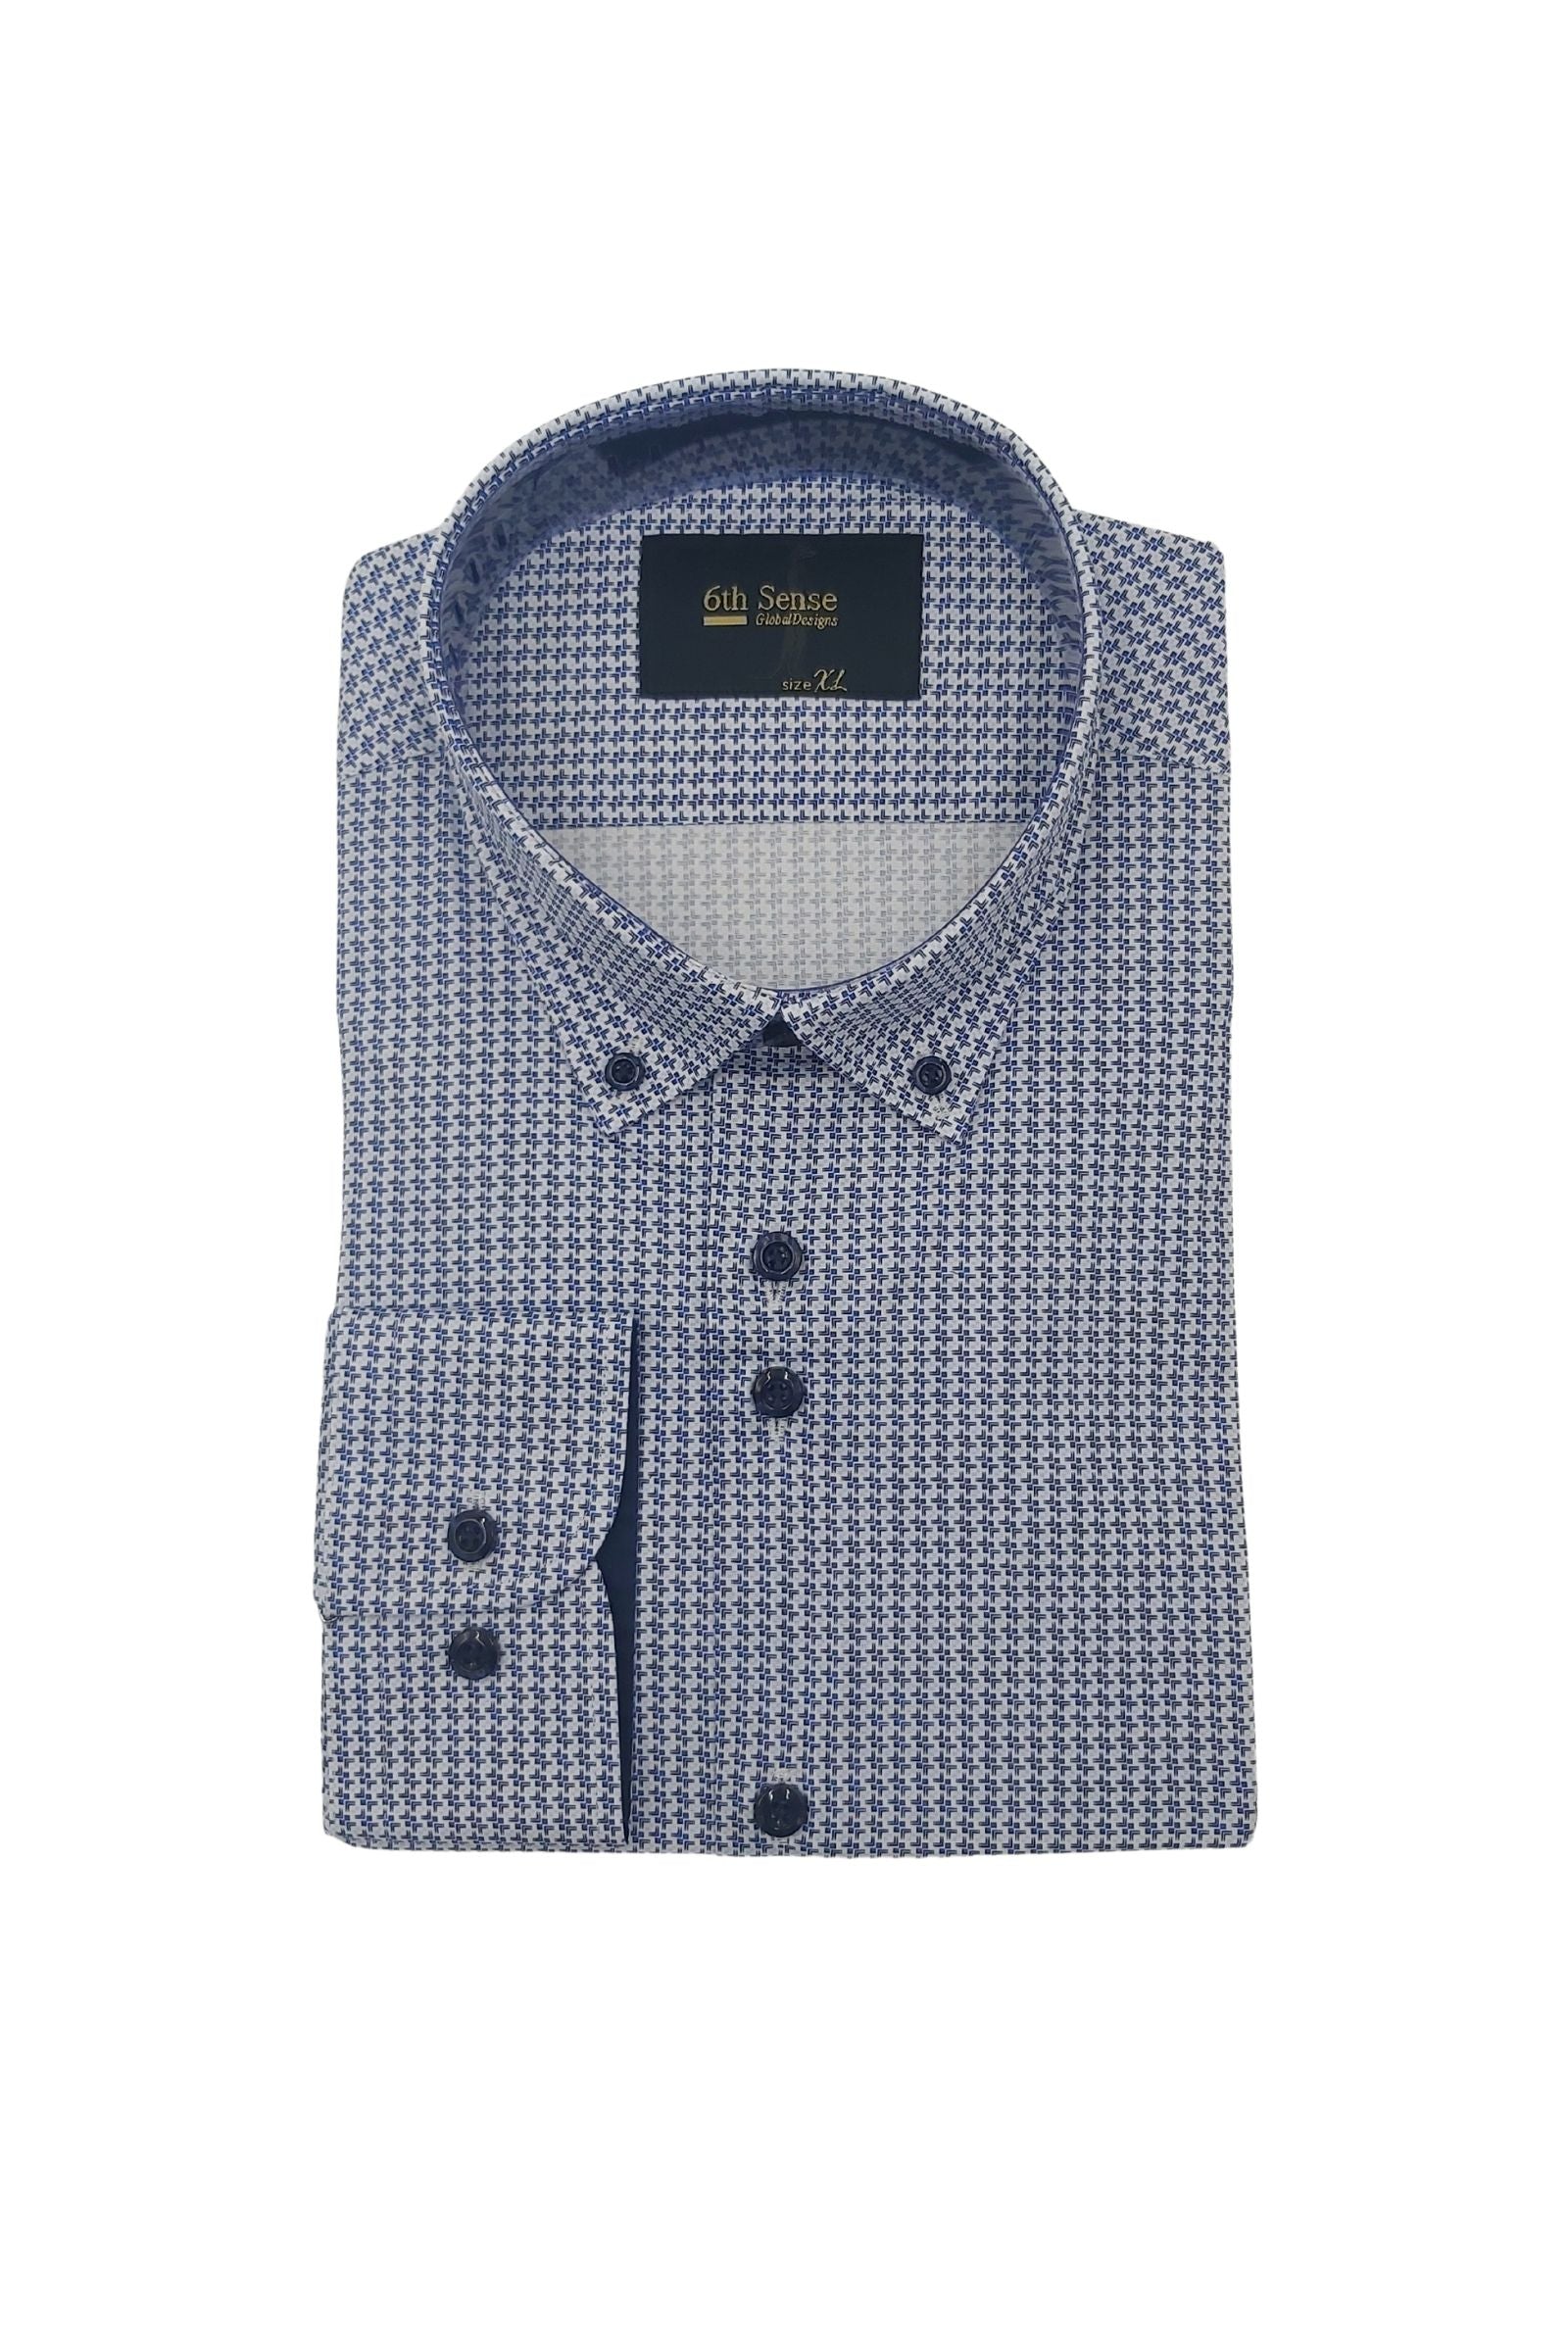 Men's Button Down Navy/Blue Pattern Shirt-Front View